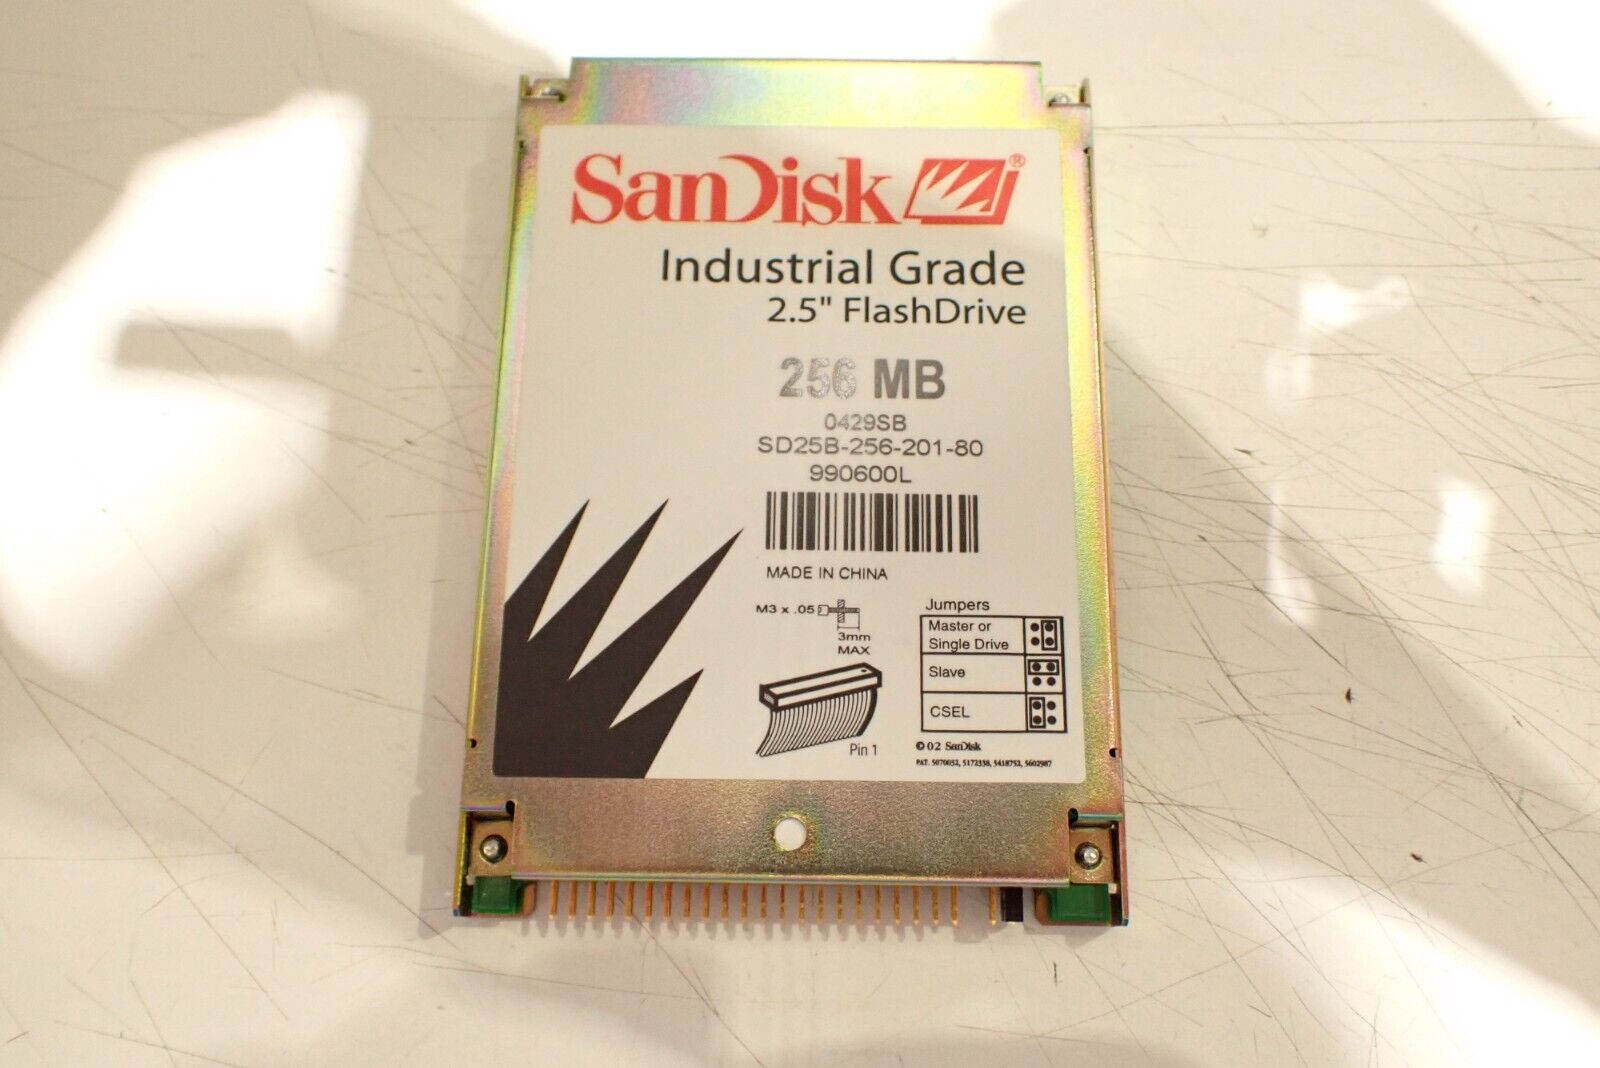 SanDisk SD25B-256-201-80